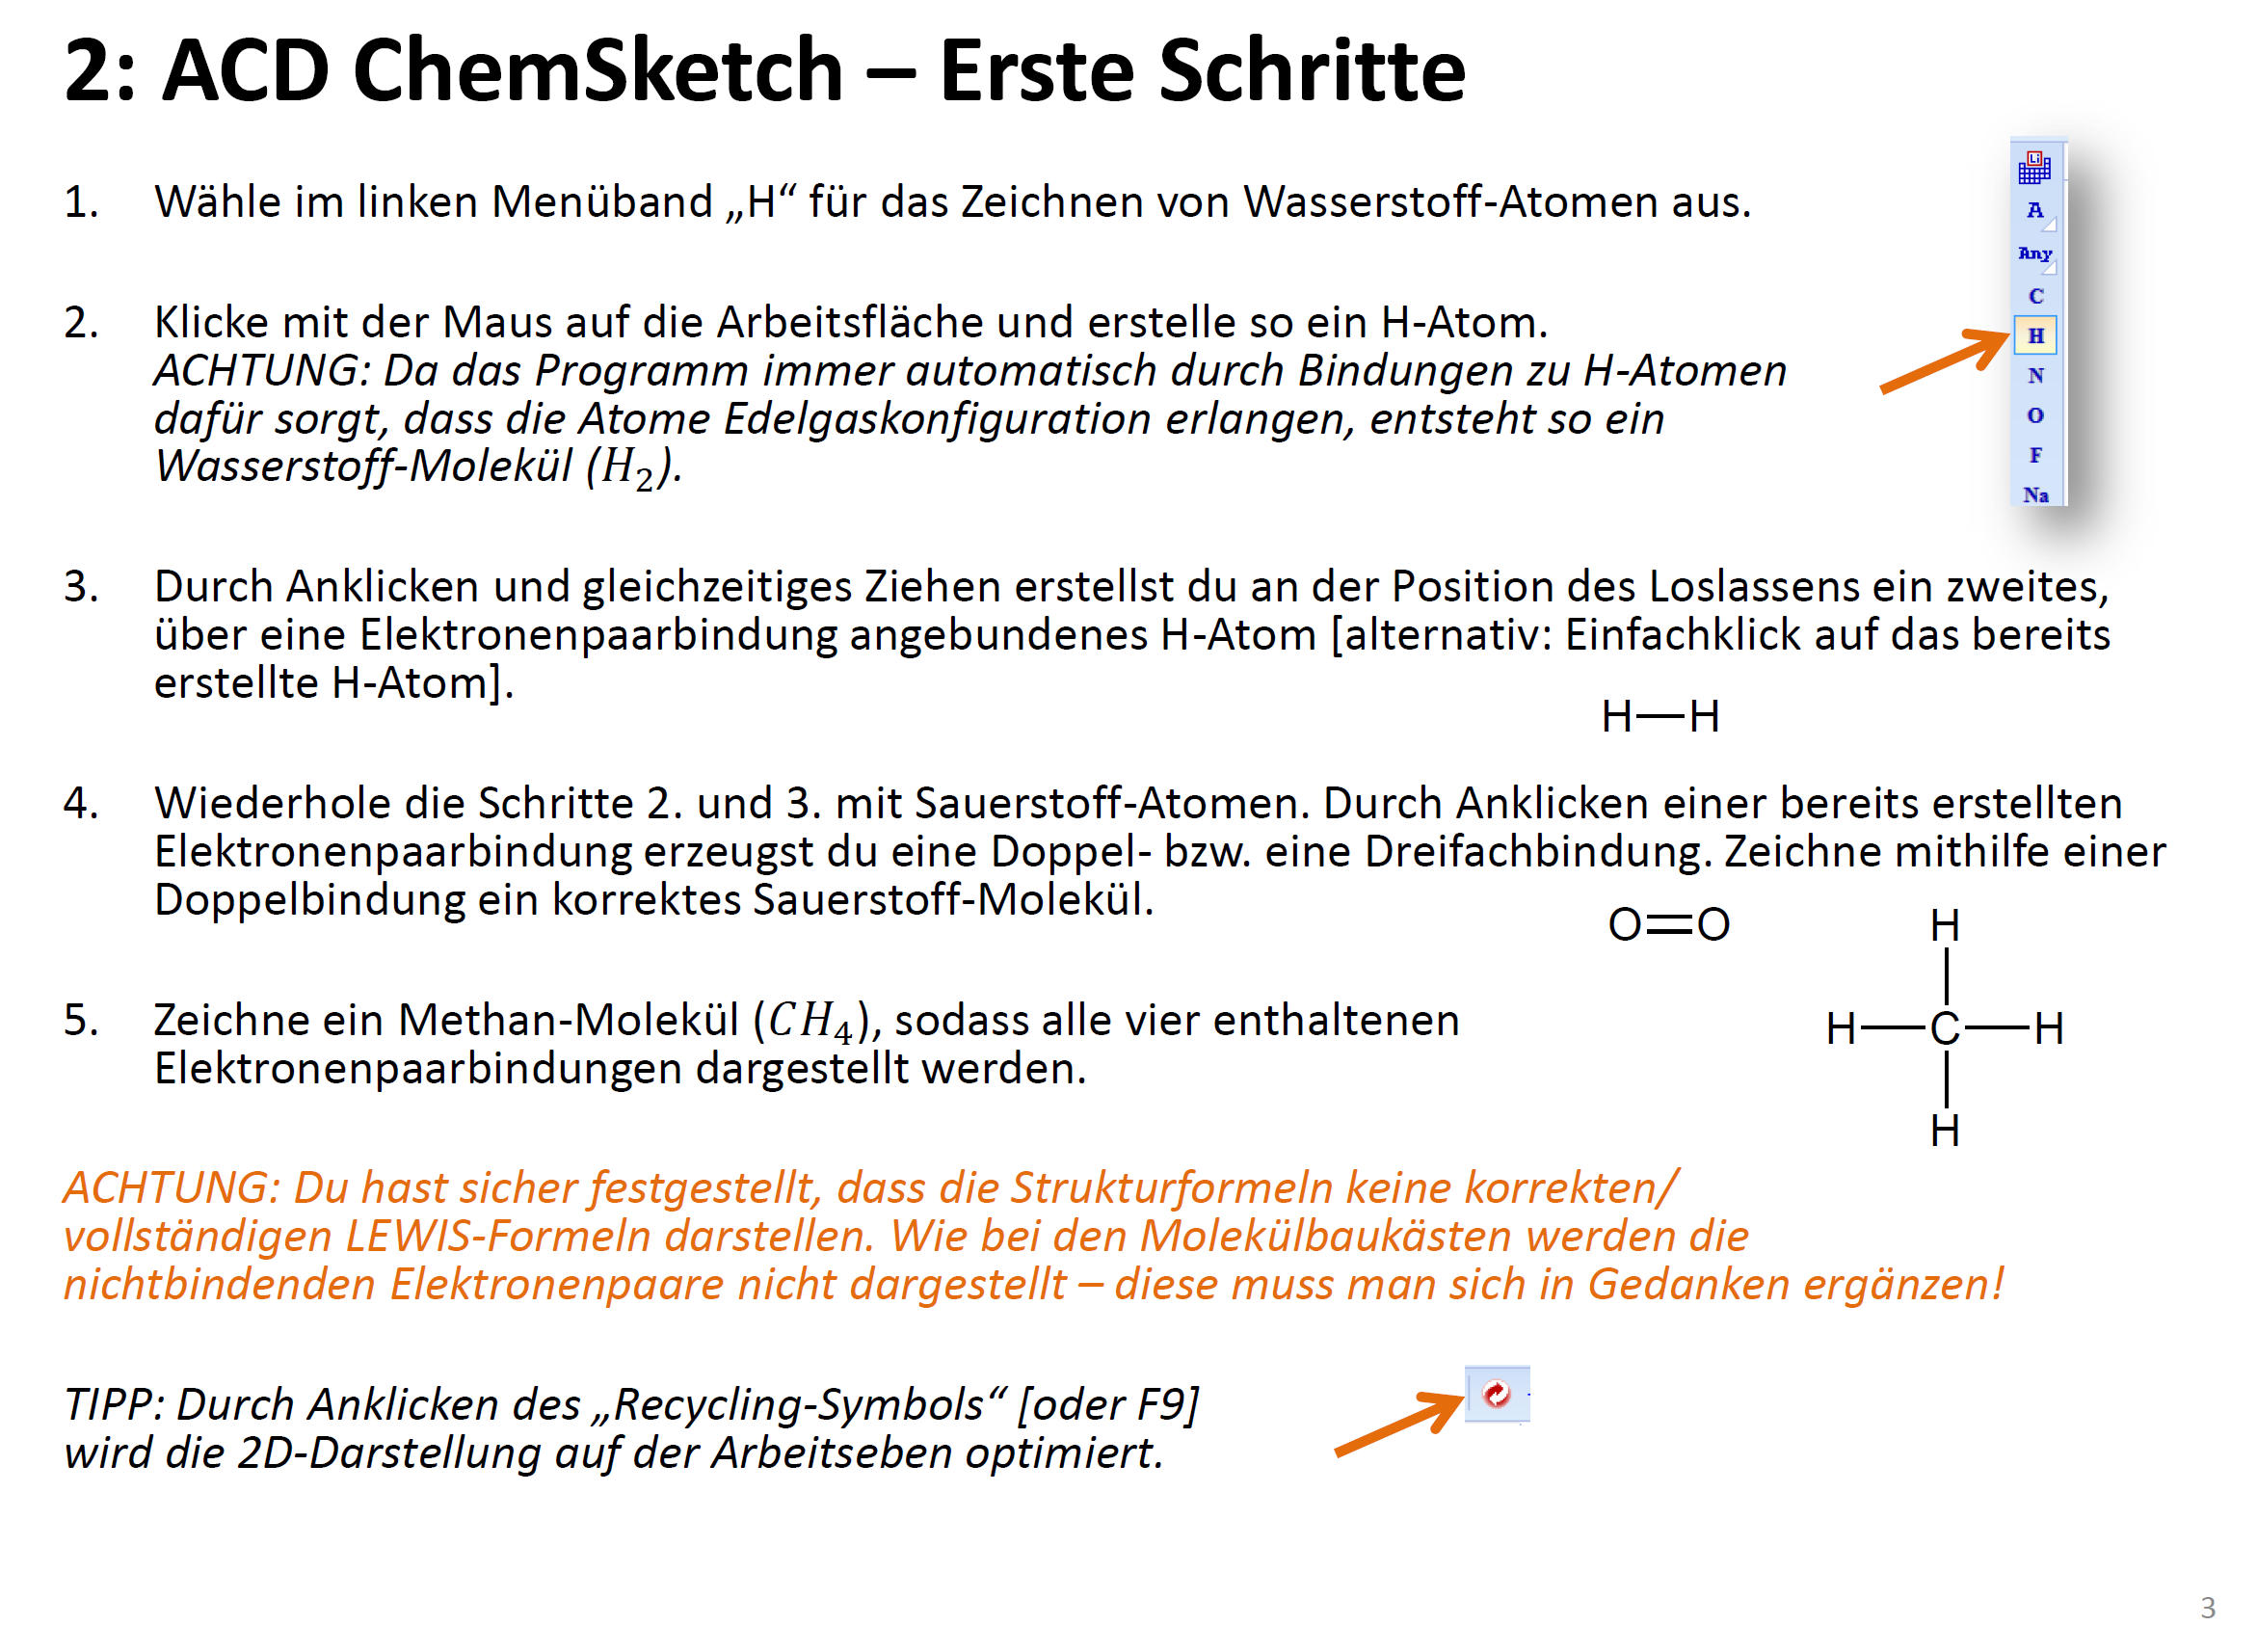 Lerntutorial ACD ChemSketch